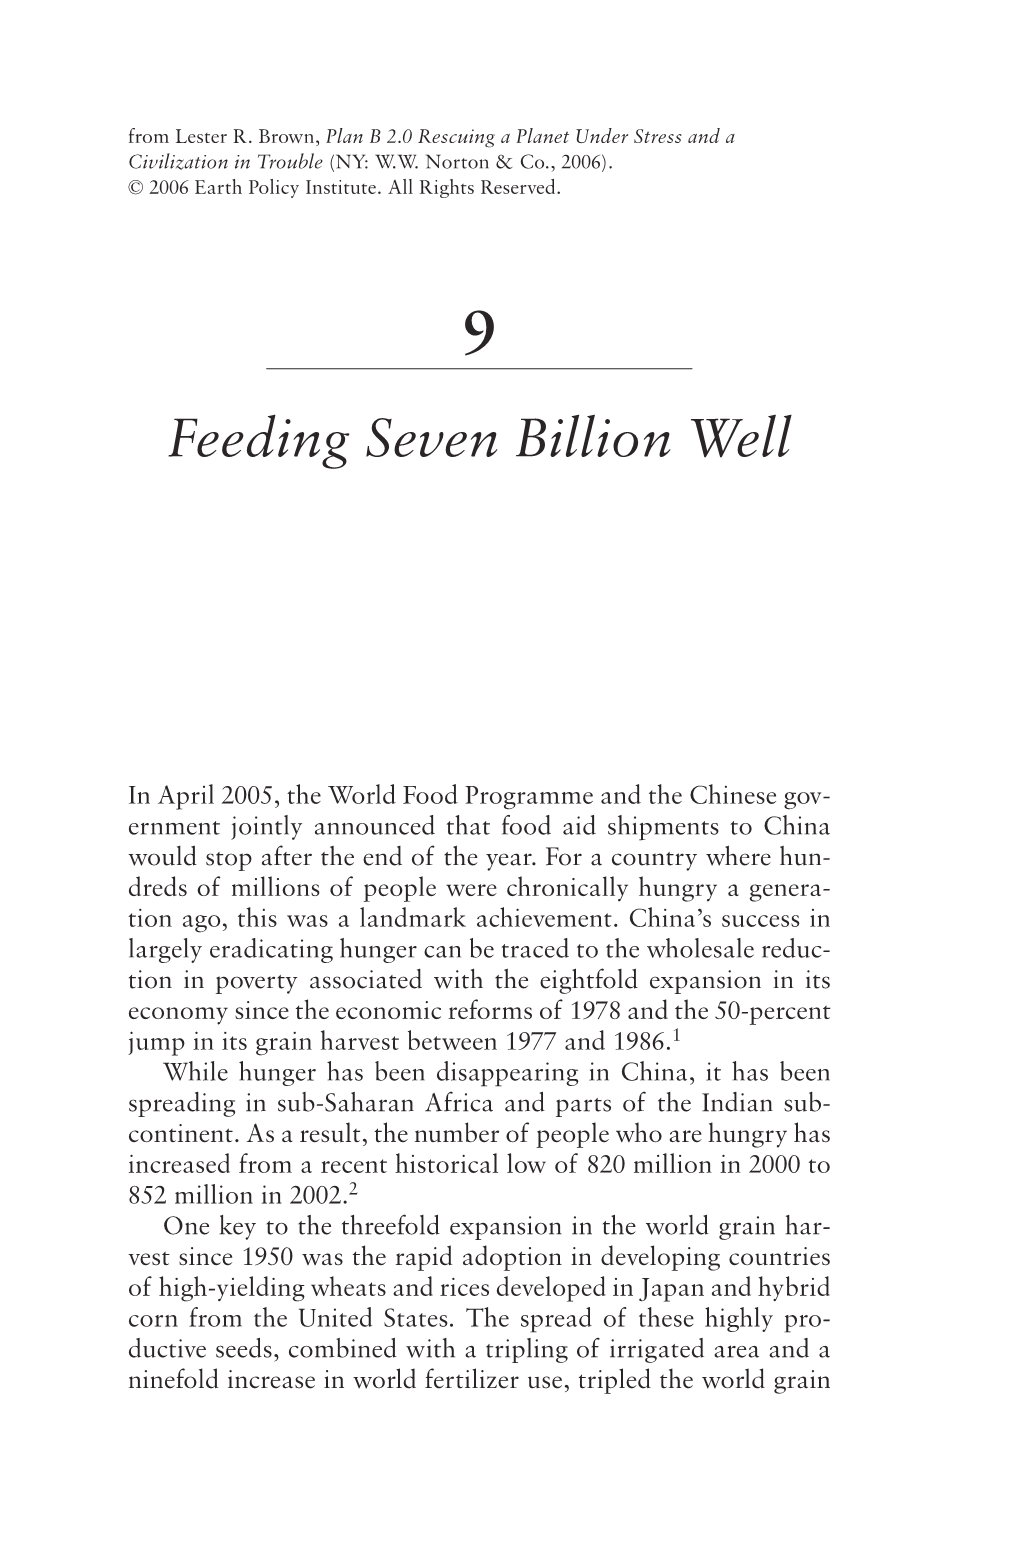 Feeding Seven Billion Well